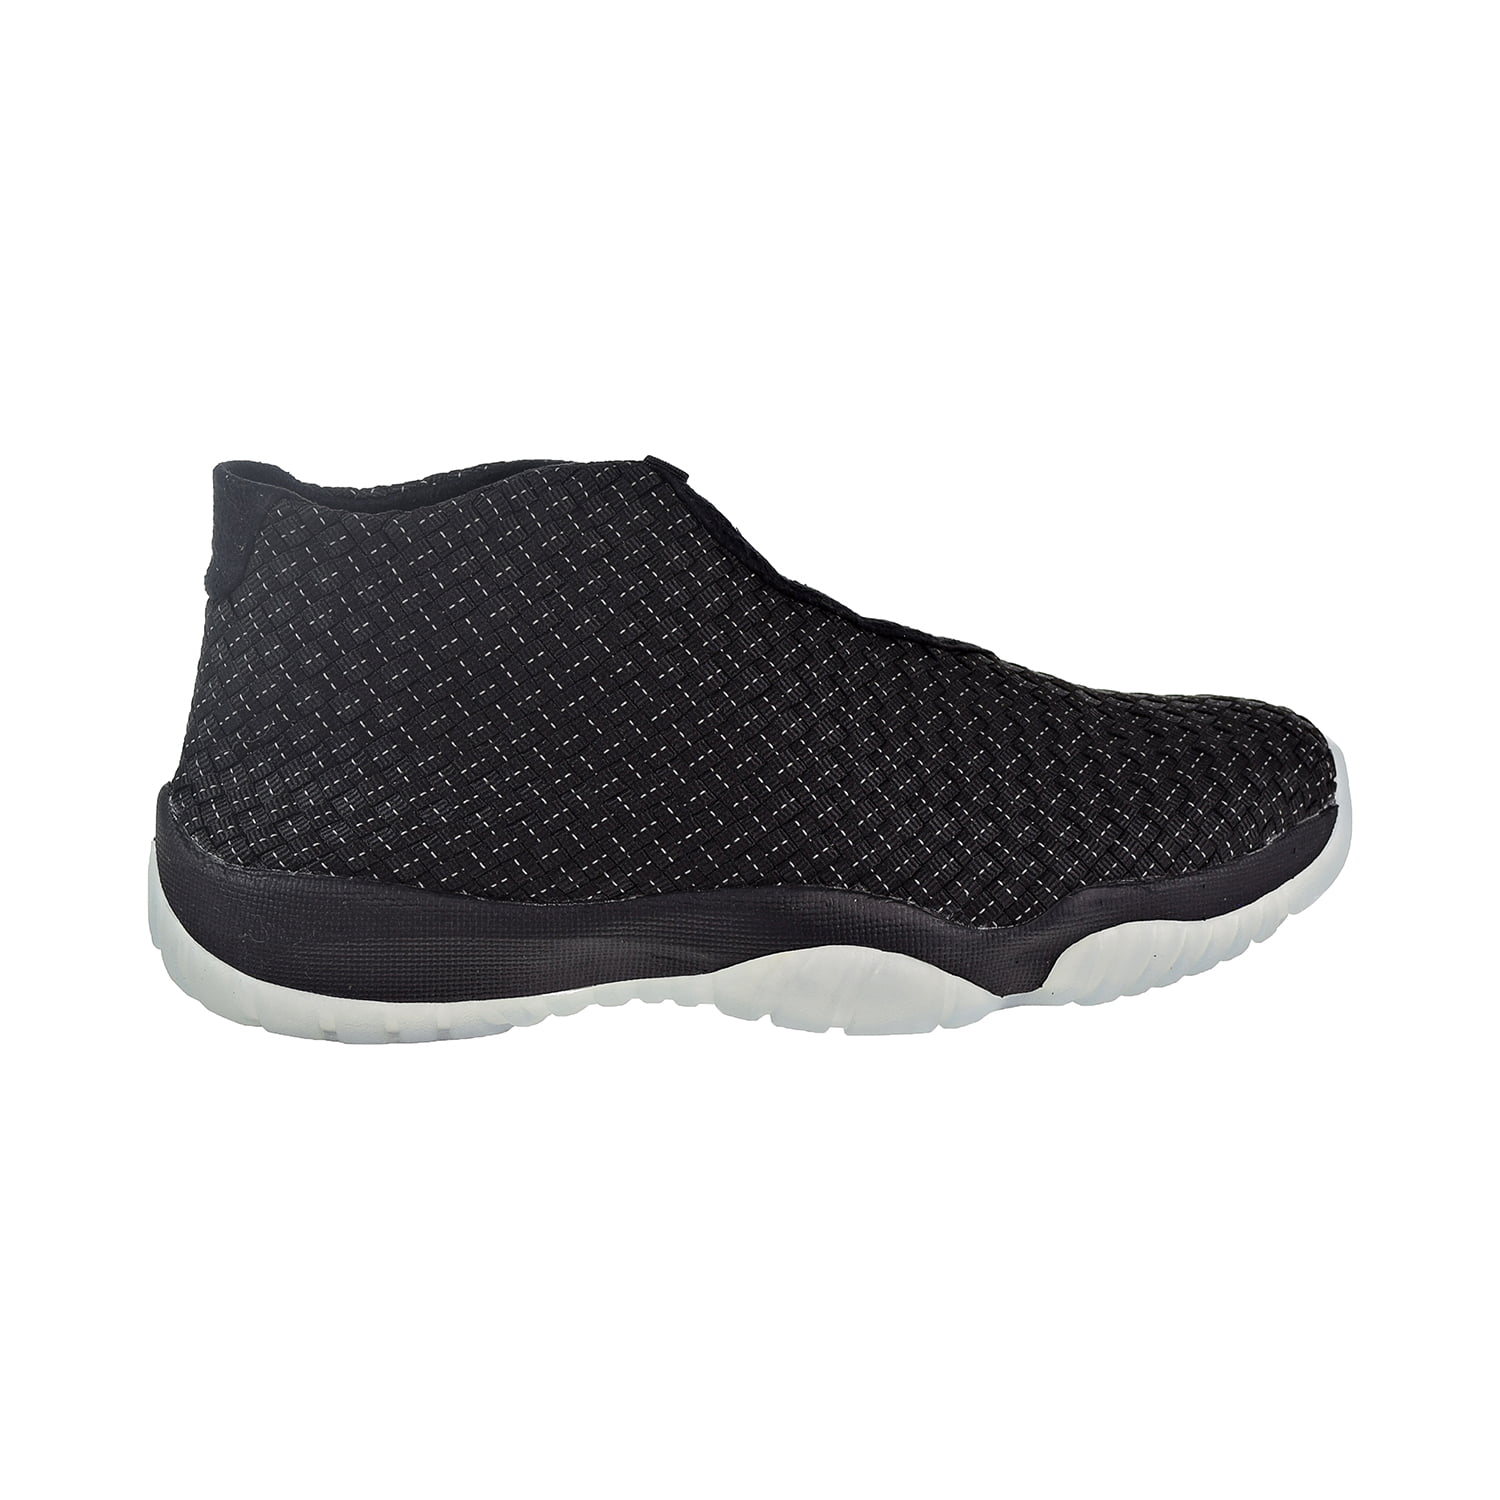 Jordan Premium Shoes Black Glow - Walmart.com